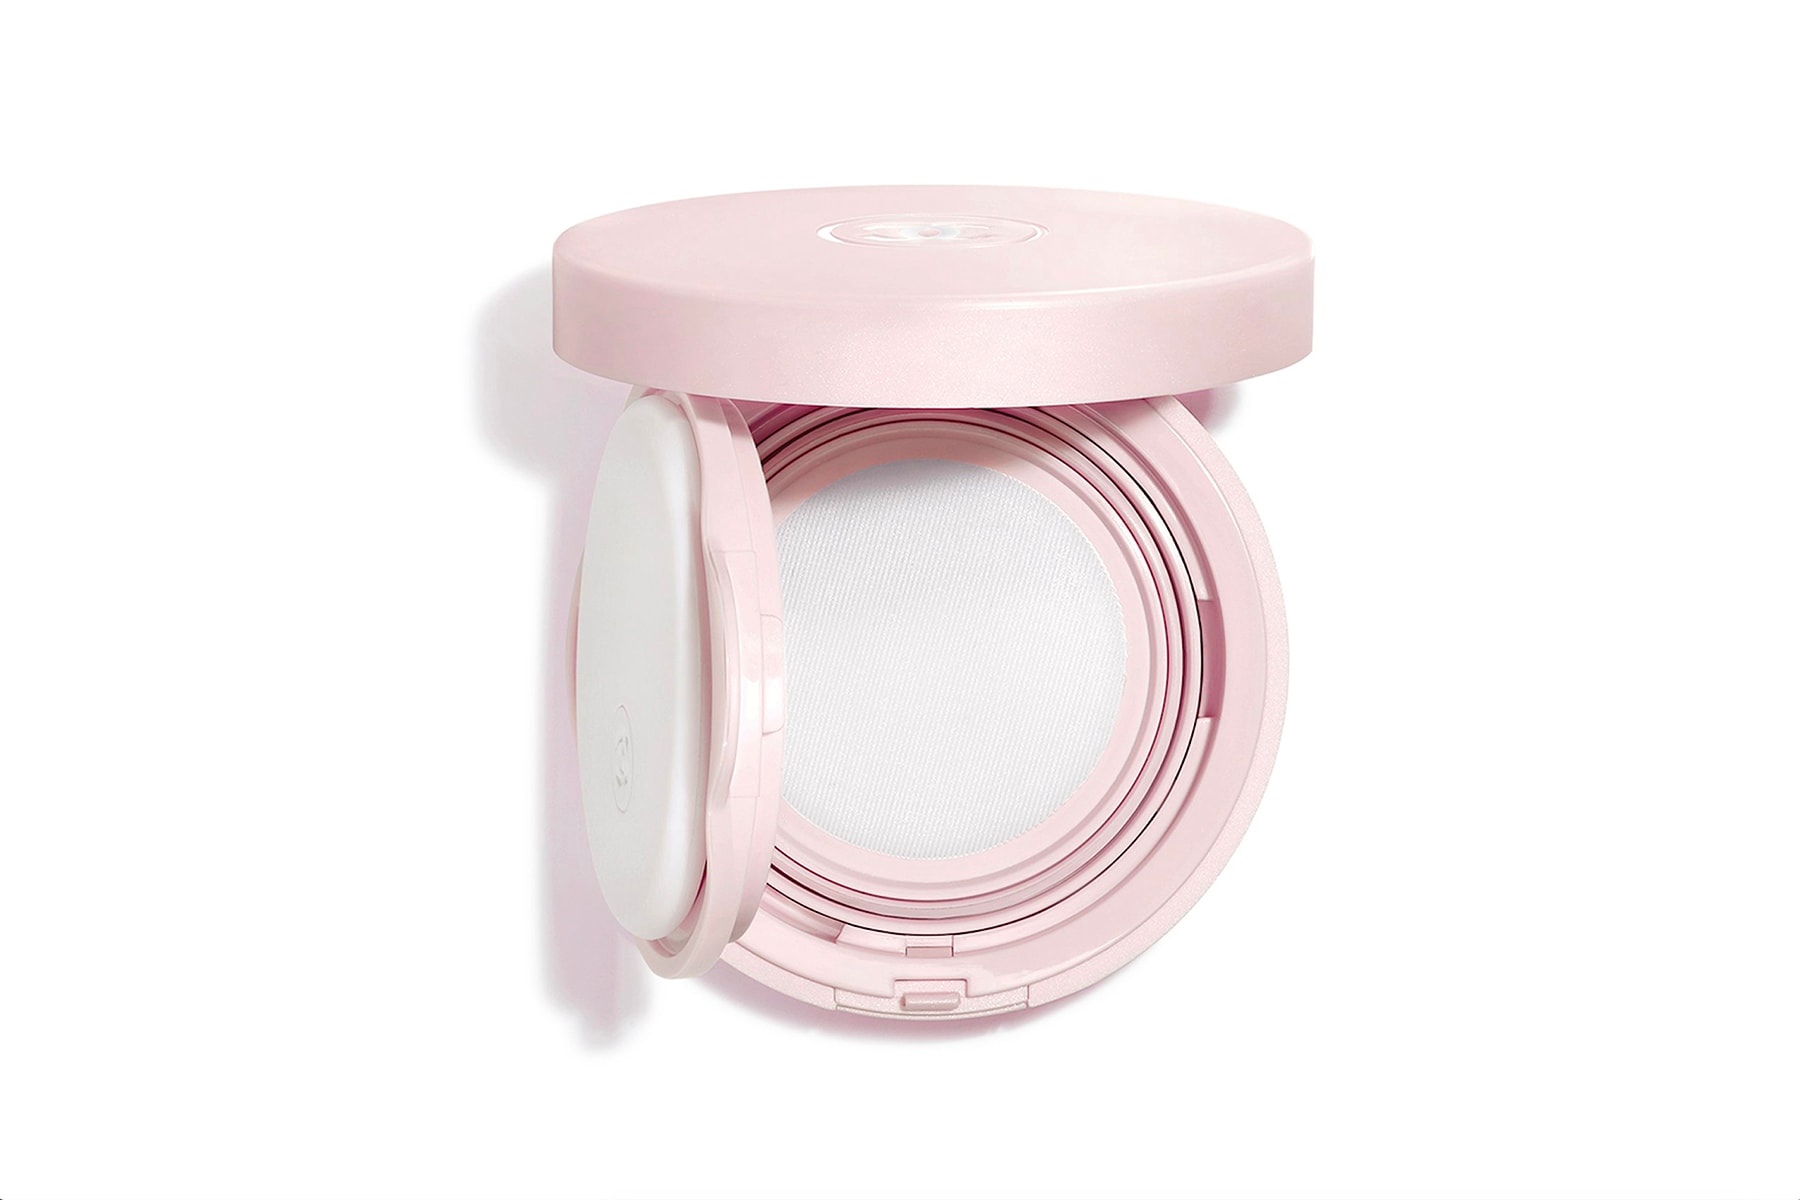 Chanel Beauty Fragrance Cushion Perfume CHANCE EAU TENDRE TOUCHE DOUCEUR PARFUMEE Millennial Pink Pastel Compact